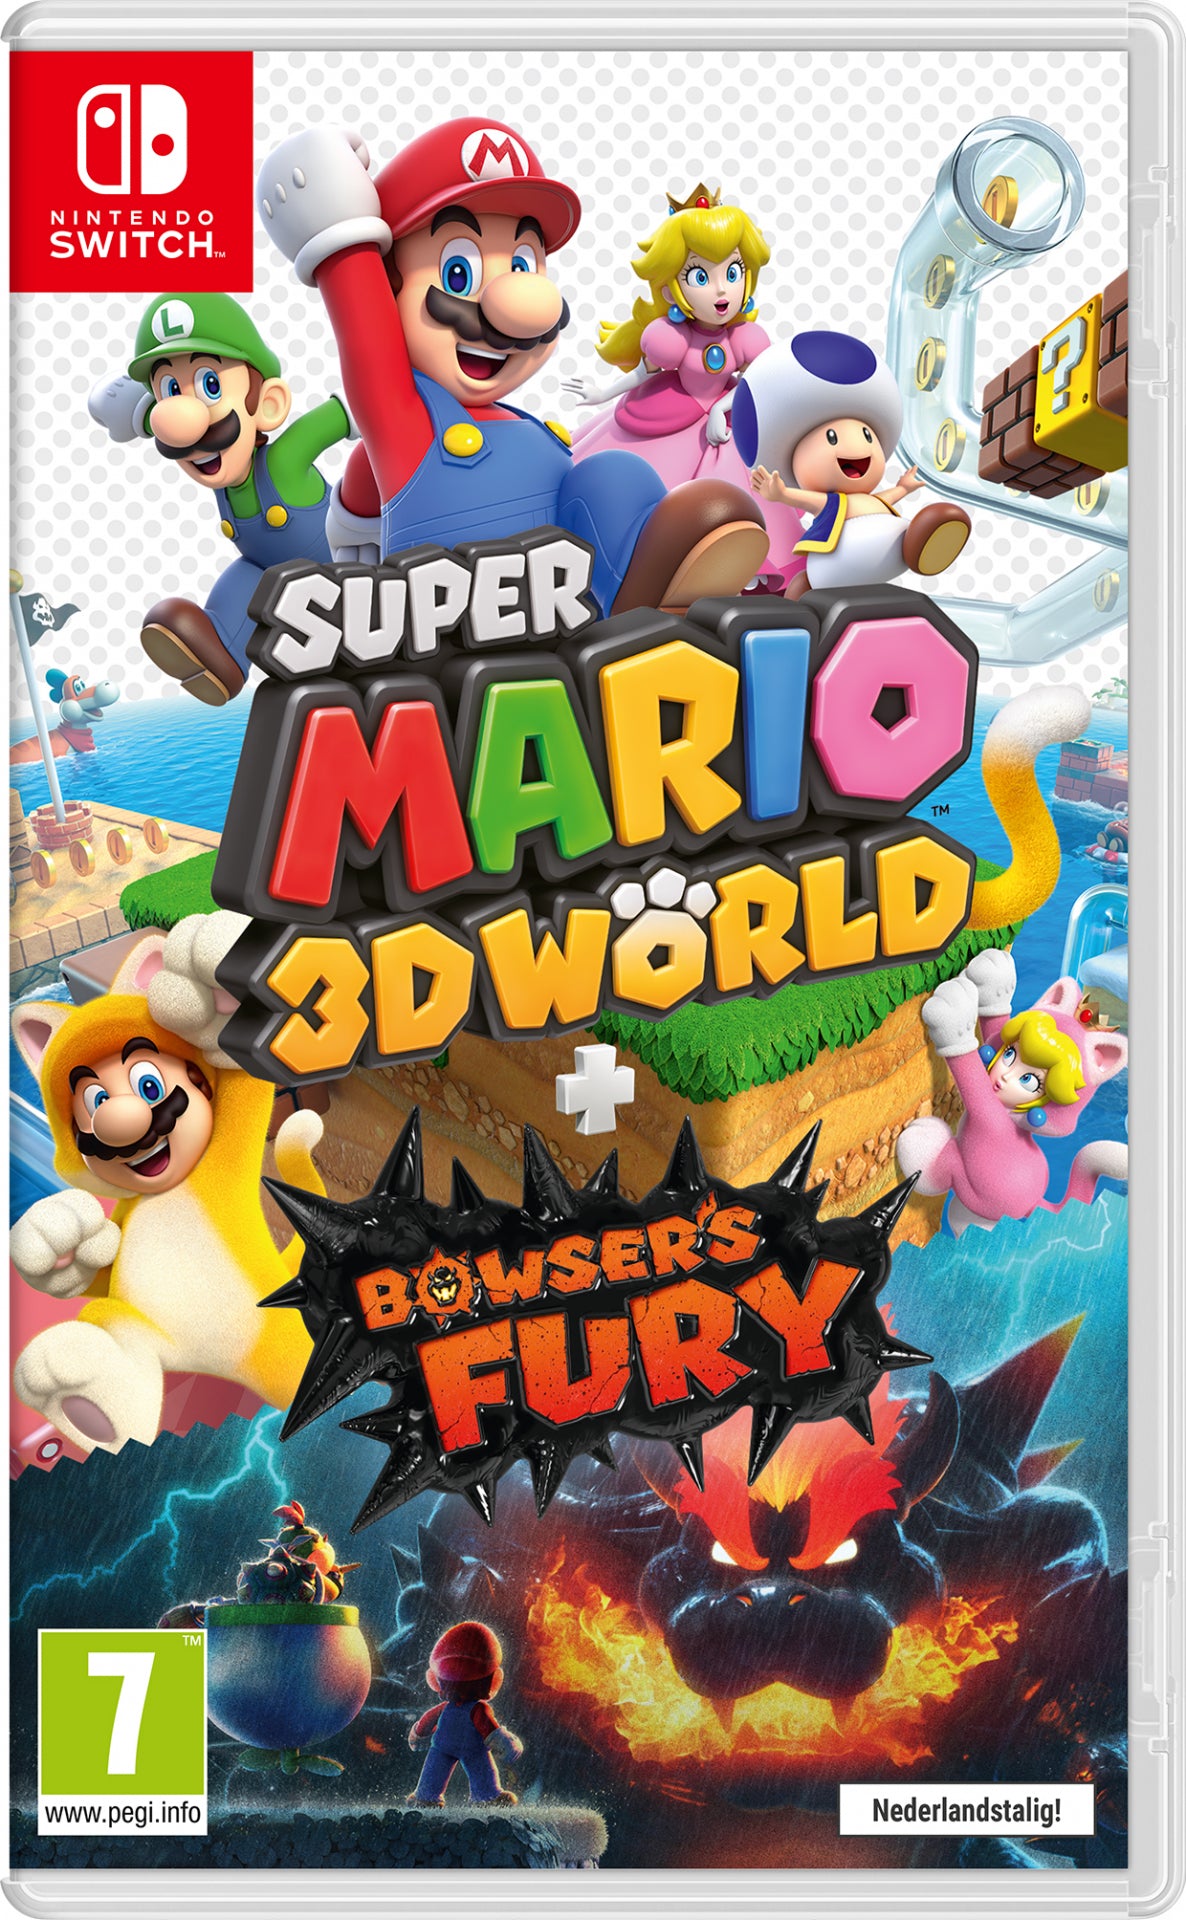 Super Mario 3D World + Bowser's Fury Gamesellers.nl